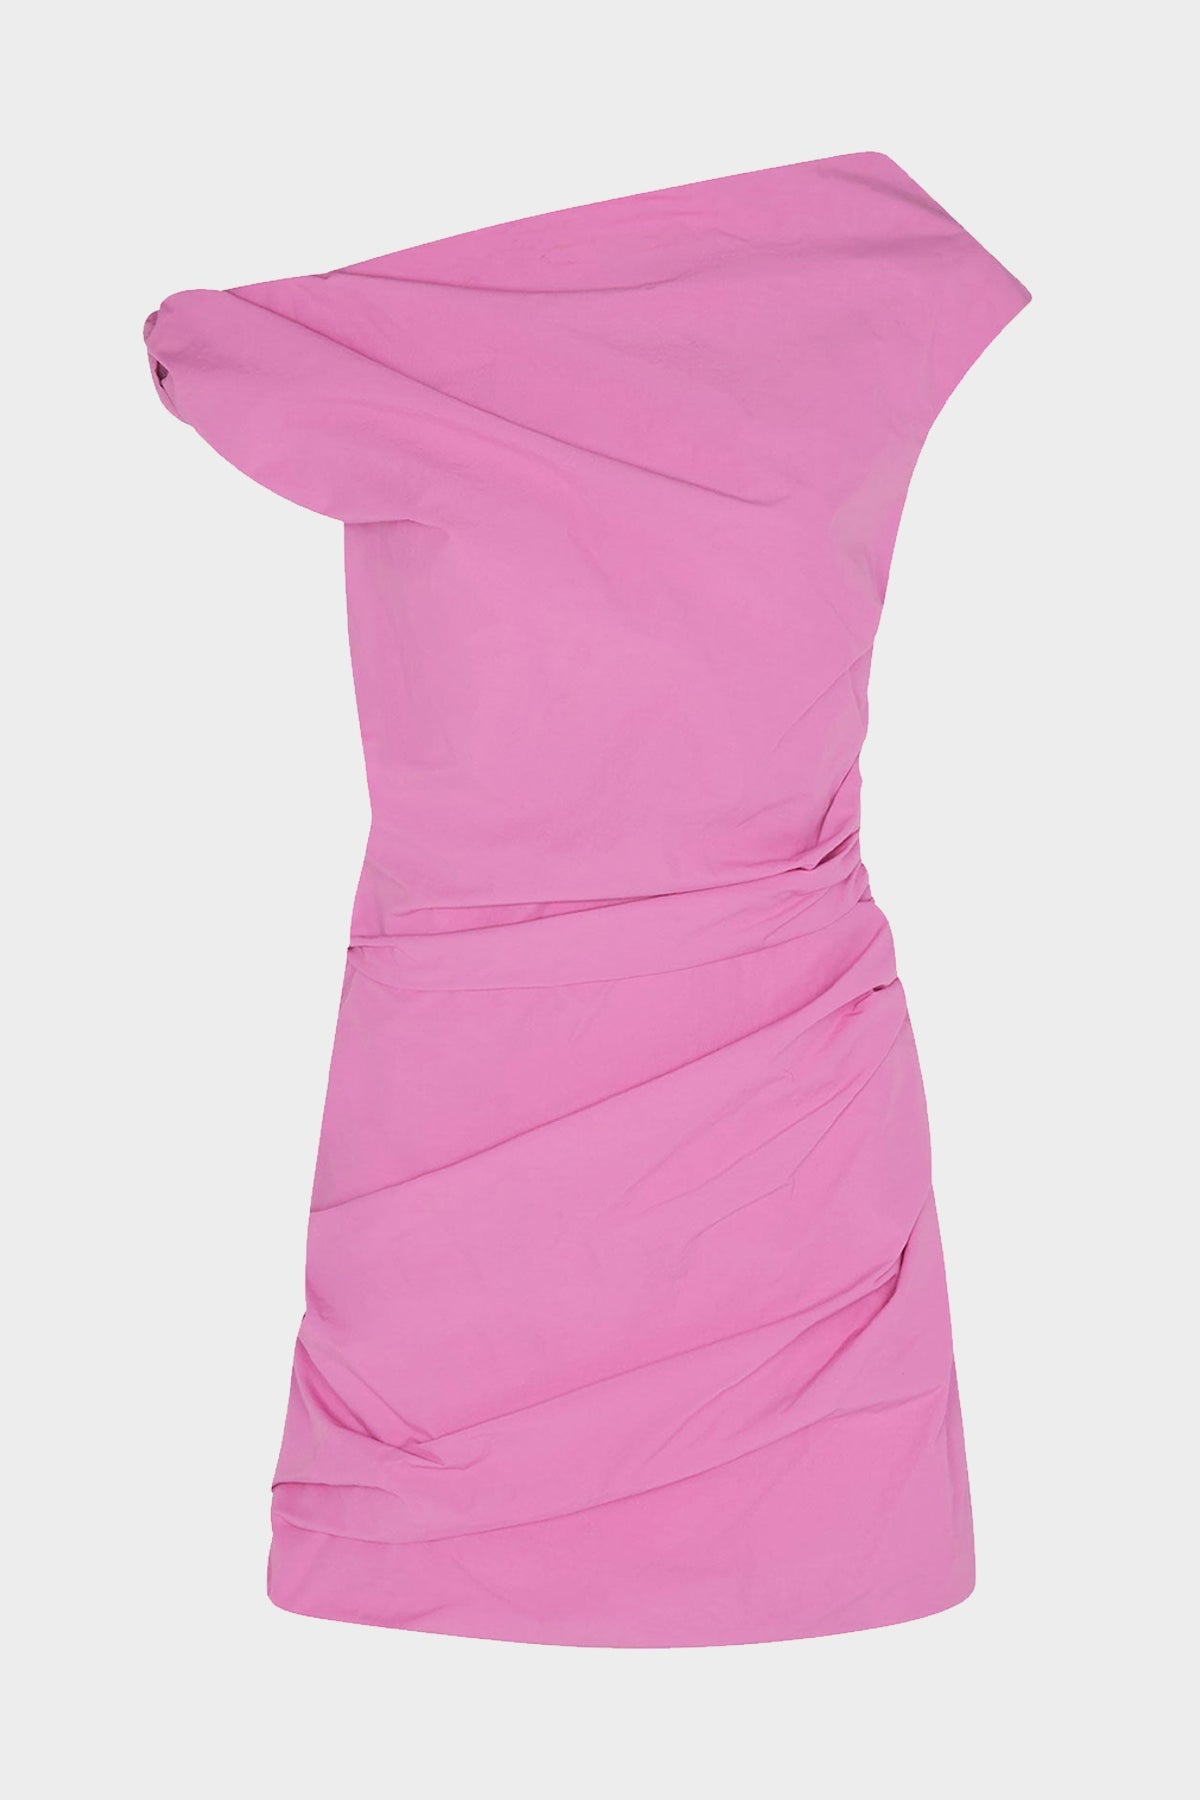 Remmy Mini Dress in Barbie Pink - shop-olivia.com